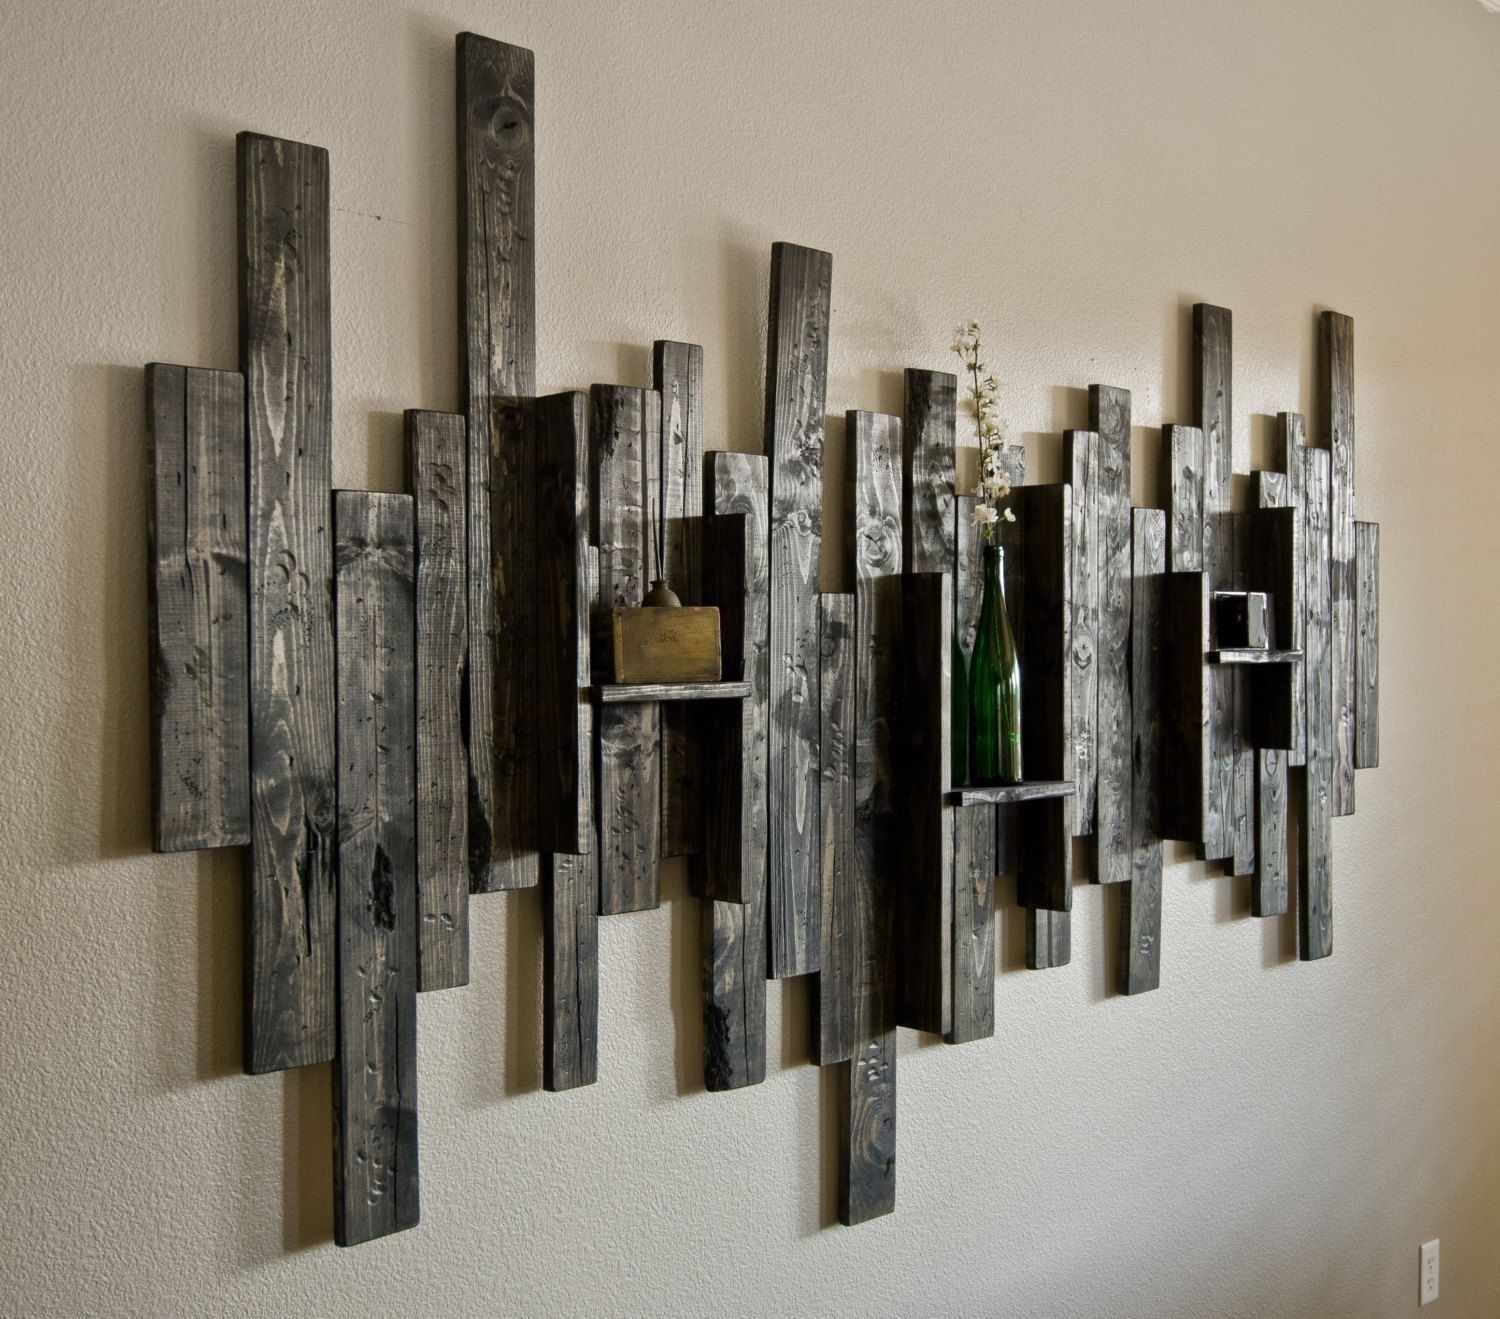 Rustic Display Shelf Decorative Wall Art | Diy | Pinterest | Display With Decorative Wall Art (Photo 4 of 20)